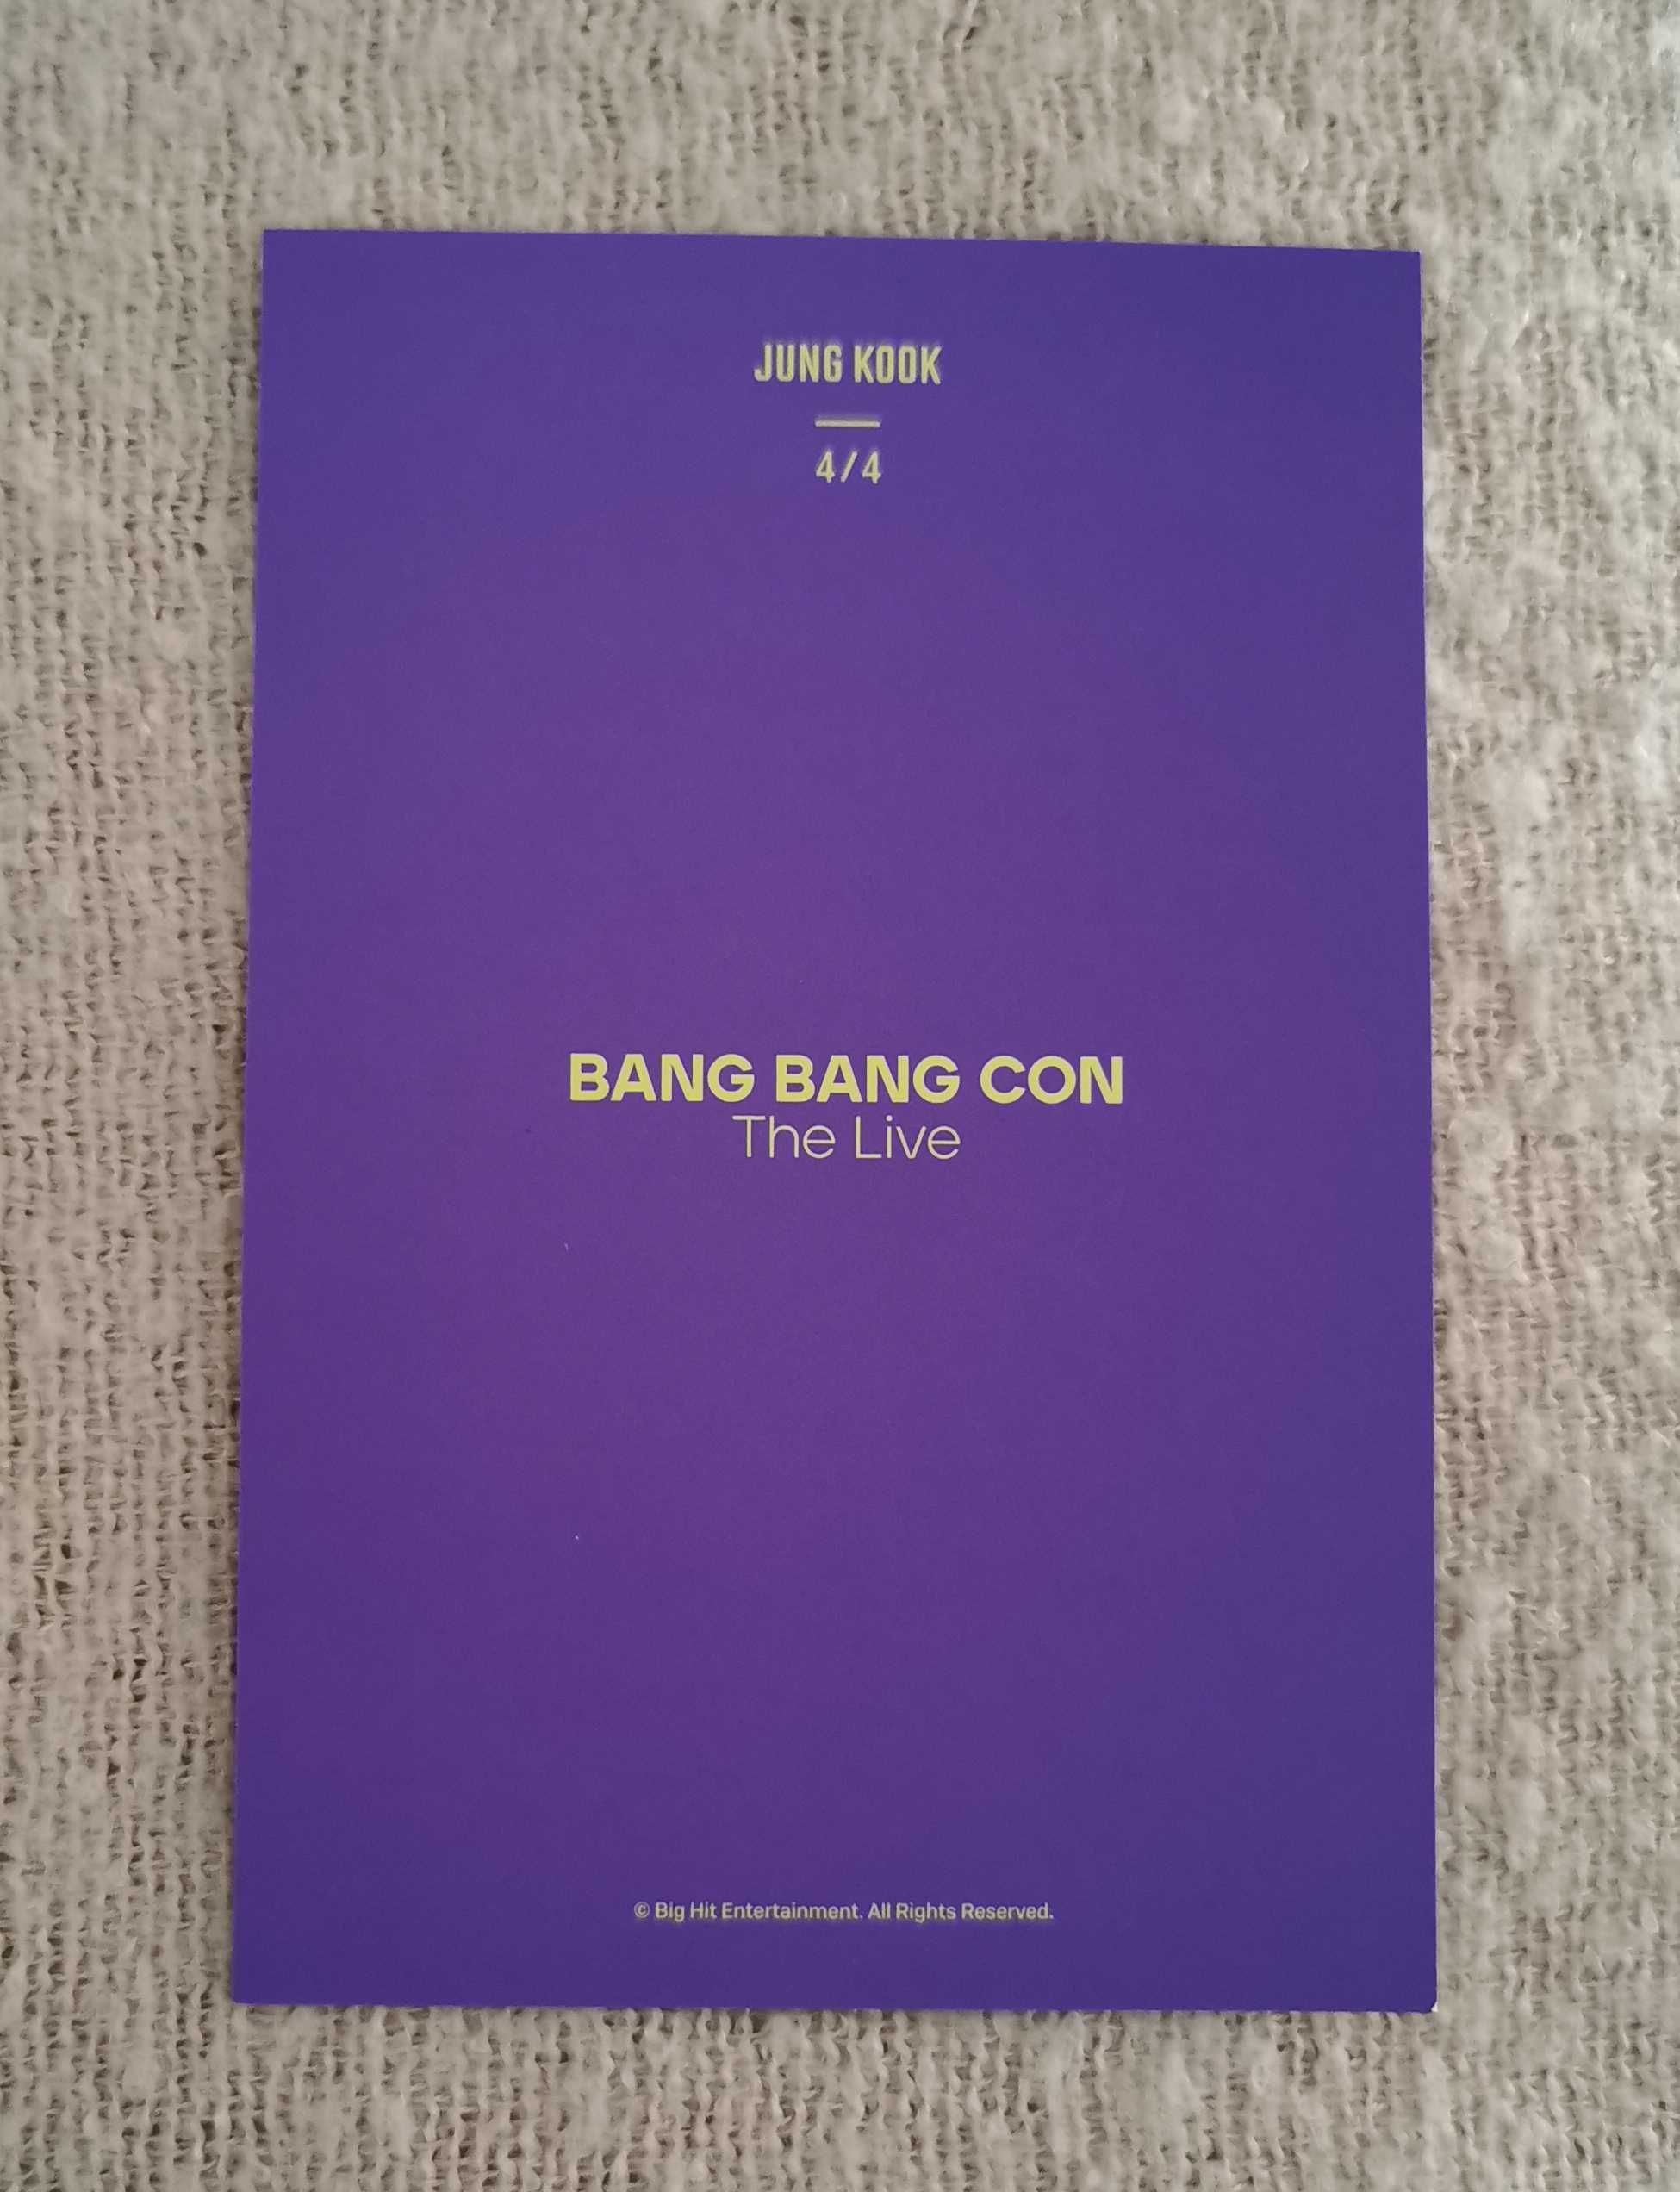 BTS Jungkook - pocztówka z merchu Bang bang con 4/4